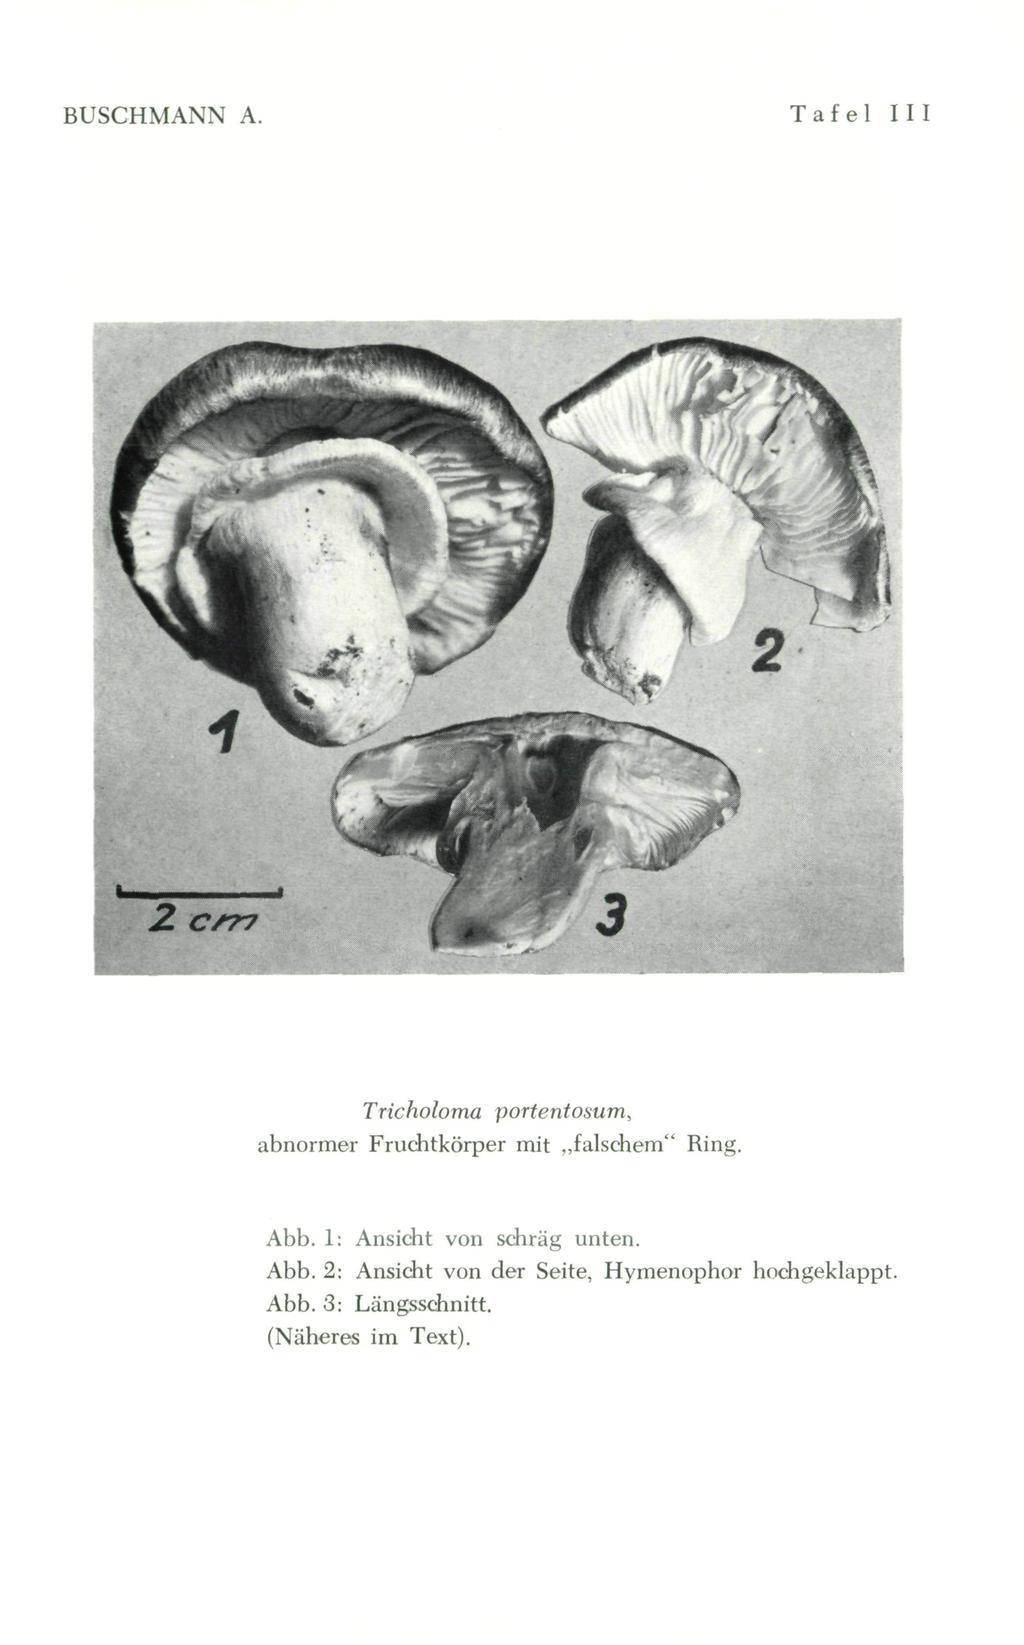 BUSCHMANN A. Tafel III Tricholoma portentosum, abnormer Fruchtkörper mit falschem" Ring. Abb.